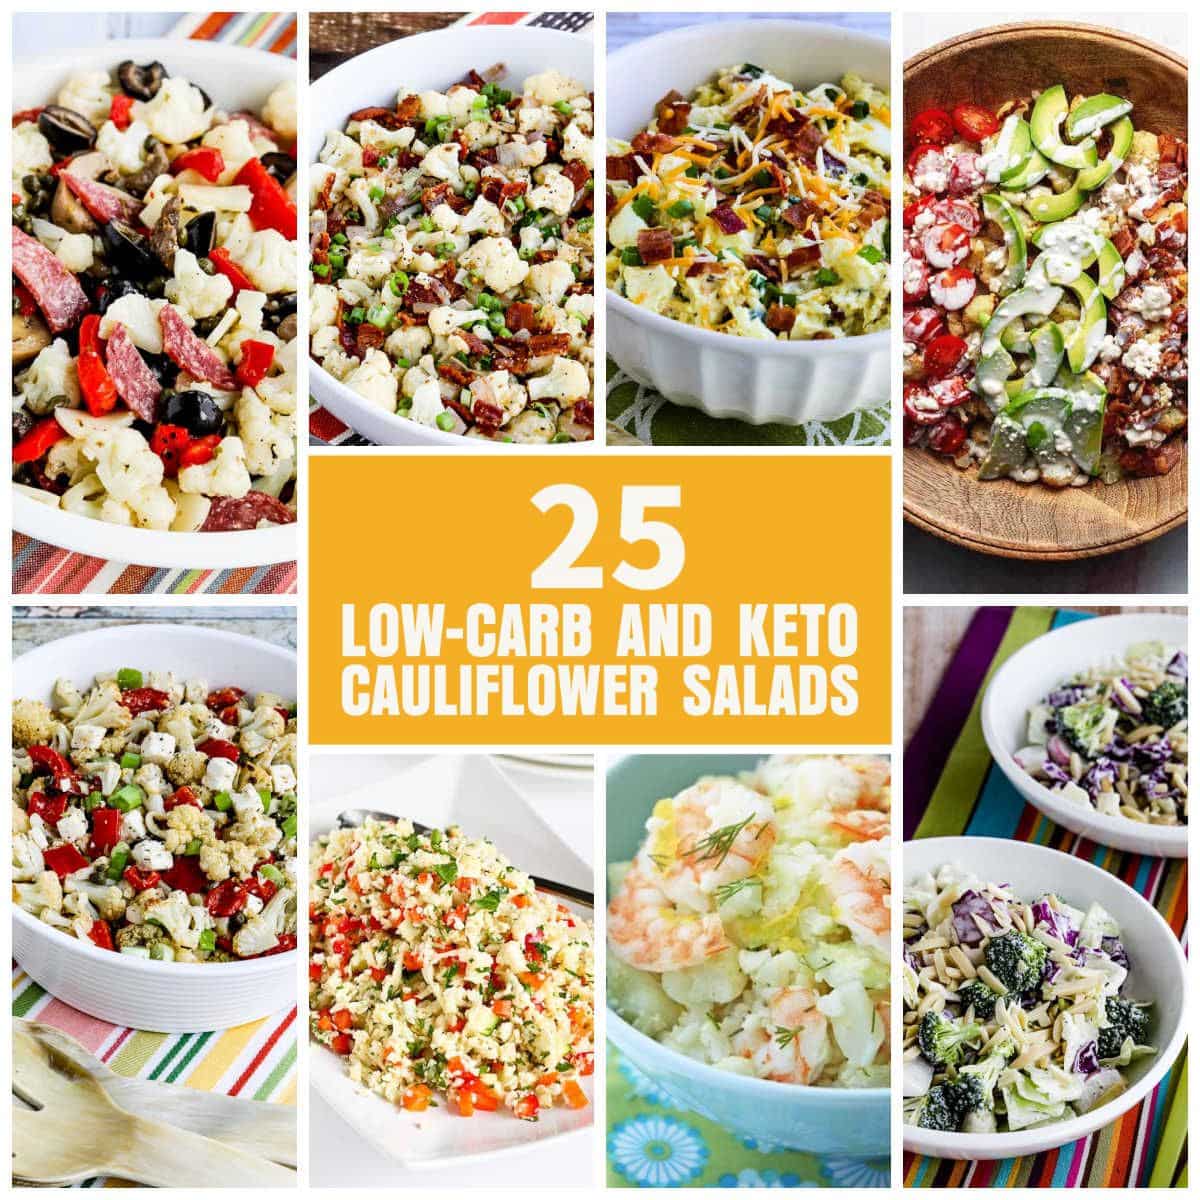 25 Low-Carb and Keto Cauliflower Salads